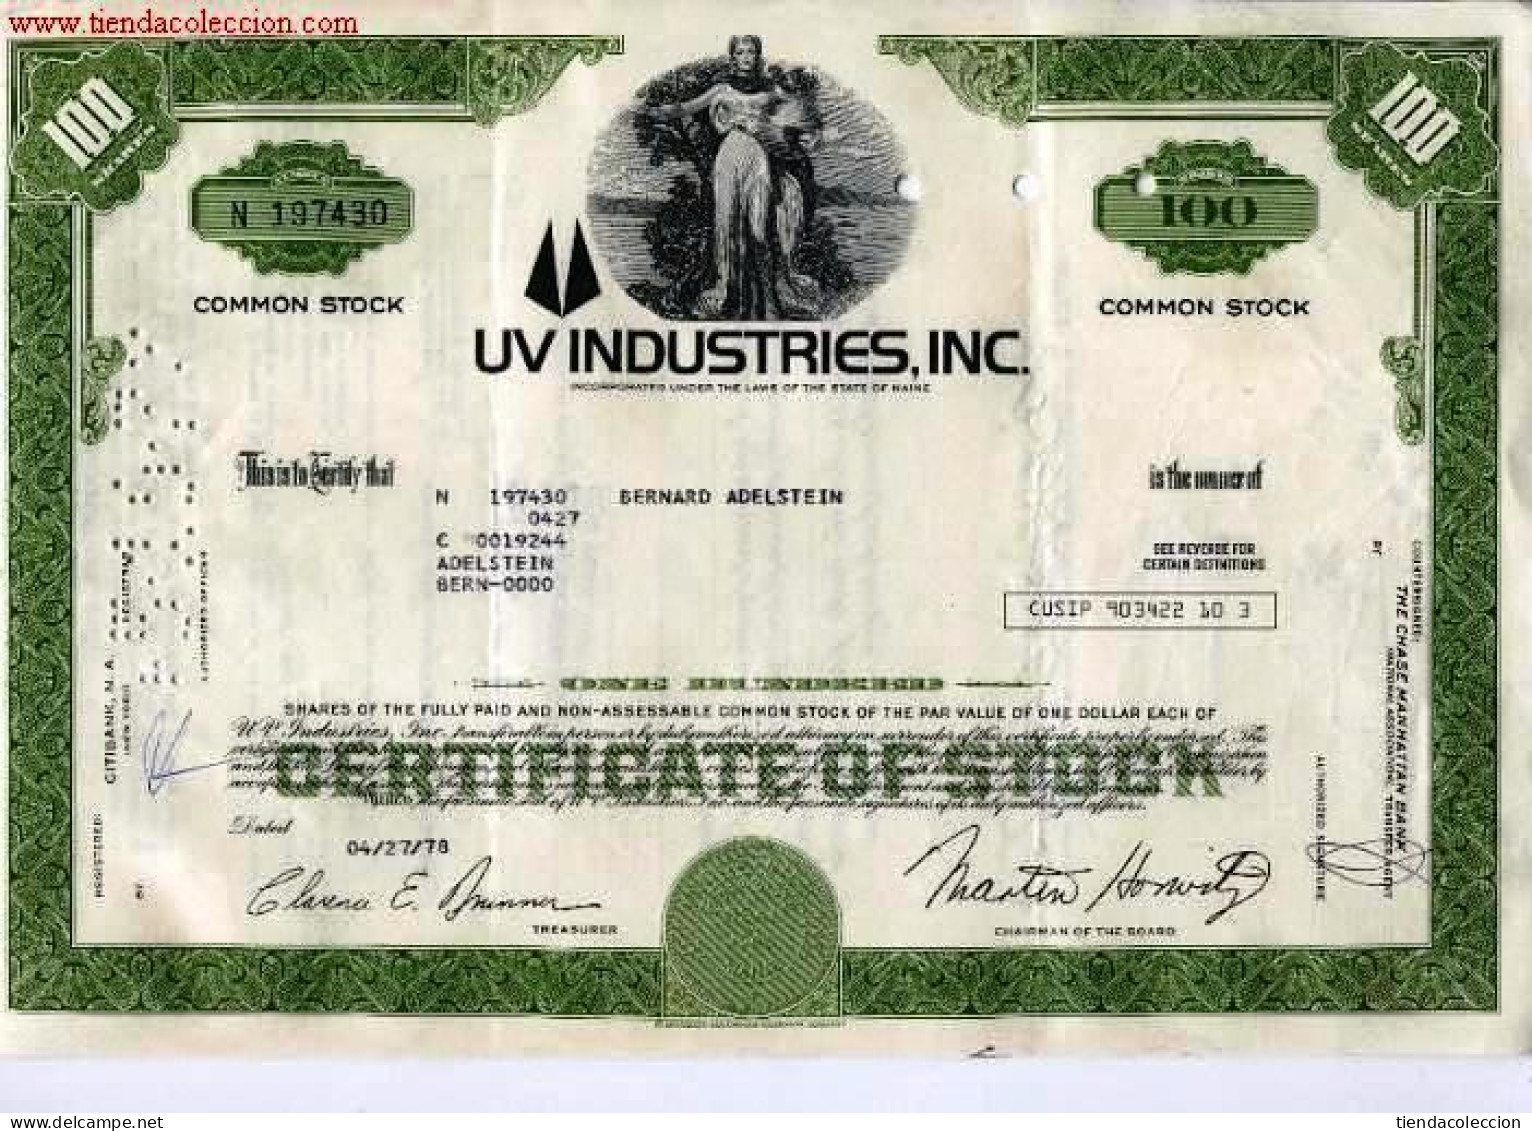 UV Industries, Inc. - S - V